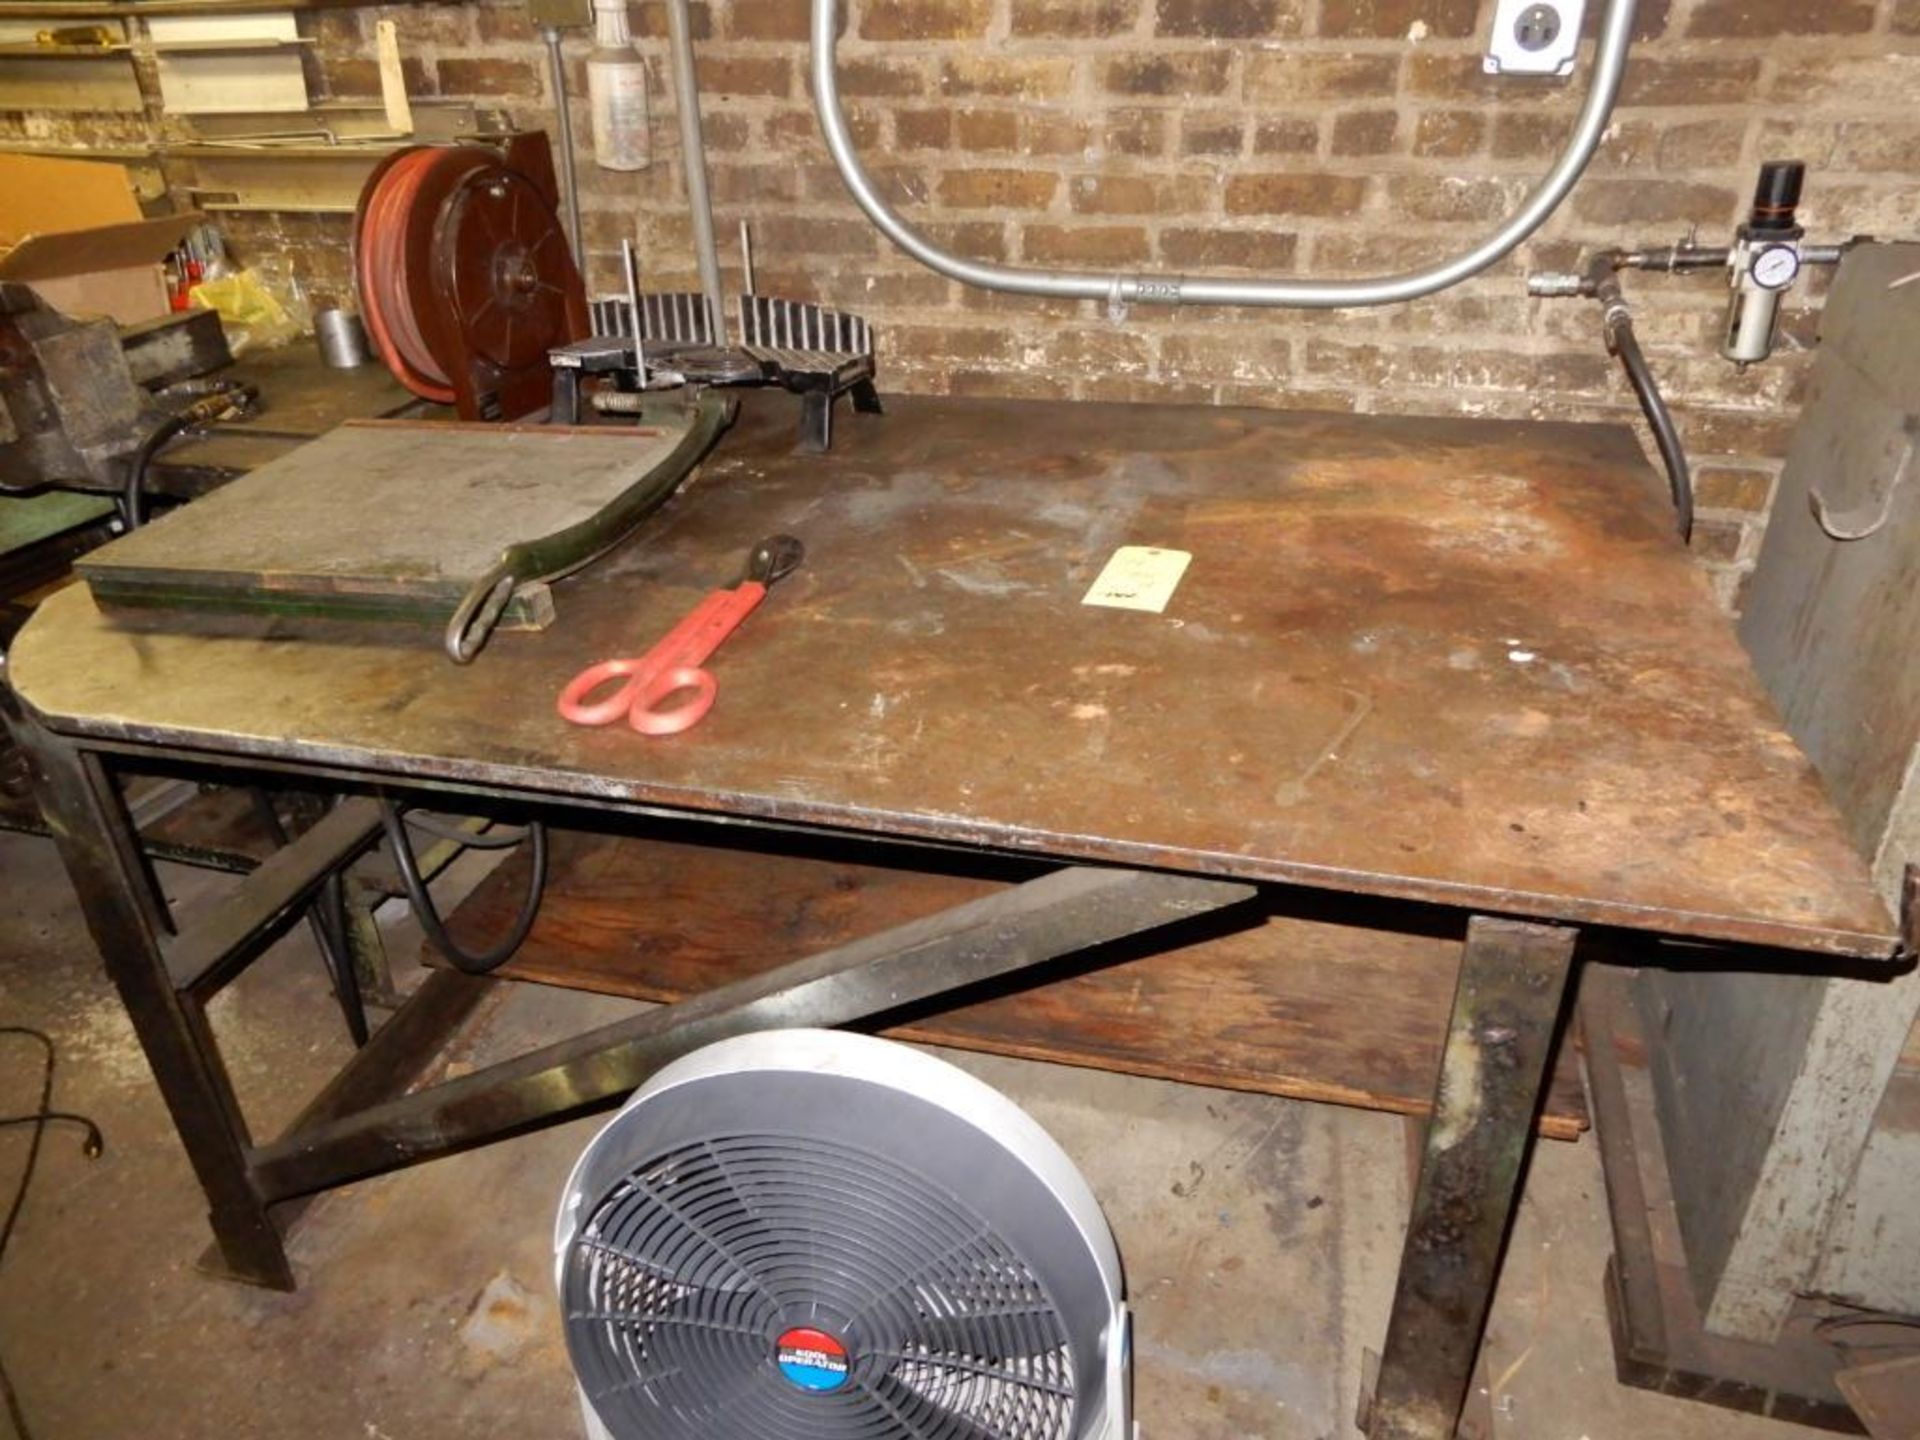 Steel Welding Table (in tool room)